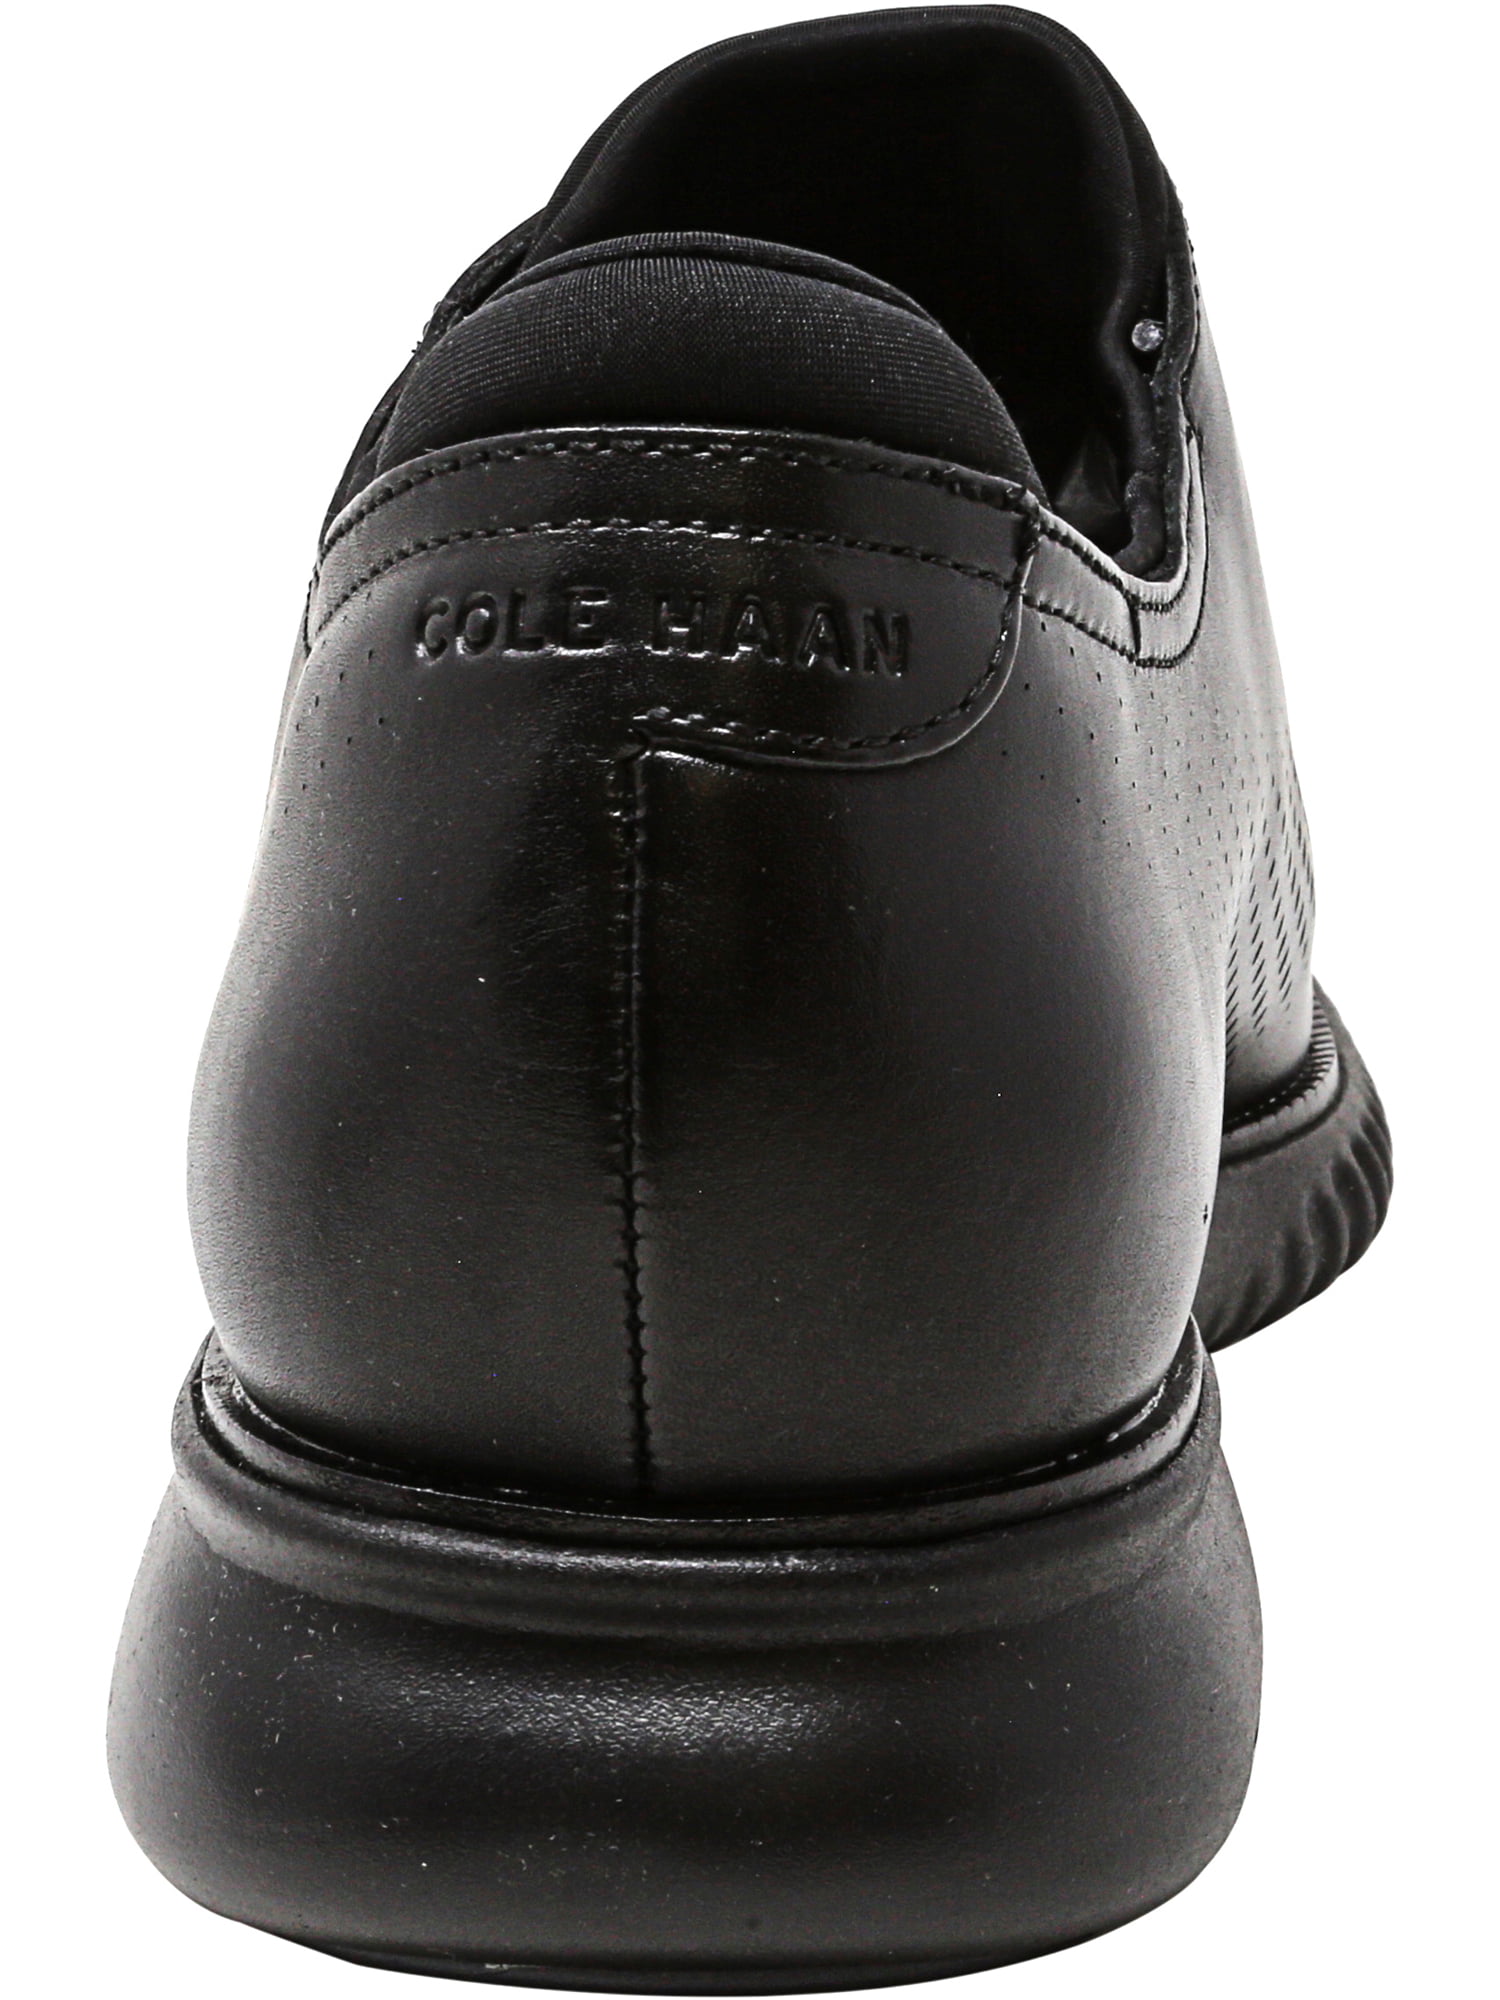 Cole Haan Mens 2.0 Zerogrand Laser Wingtip Oxford Shoe - Black